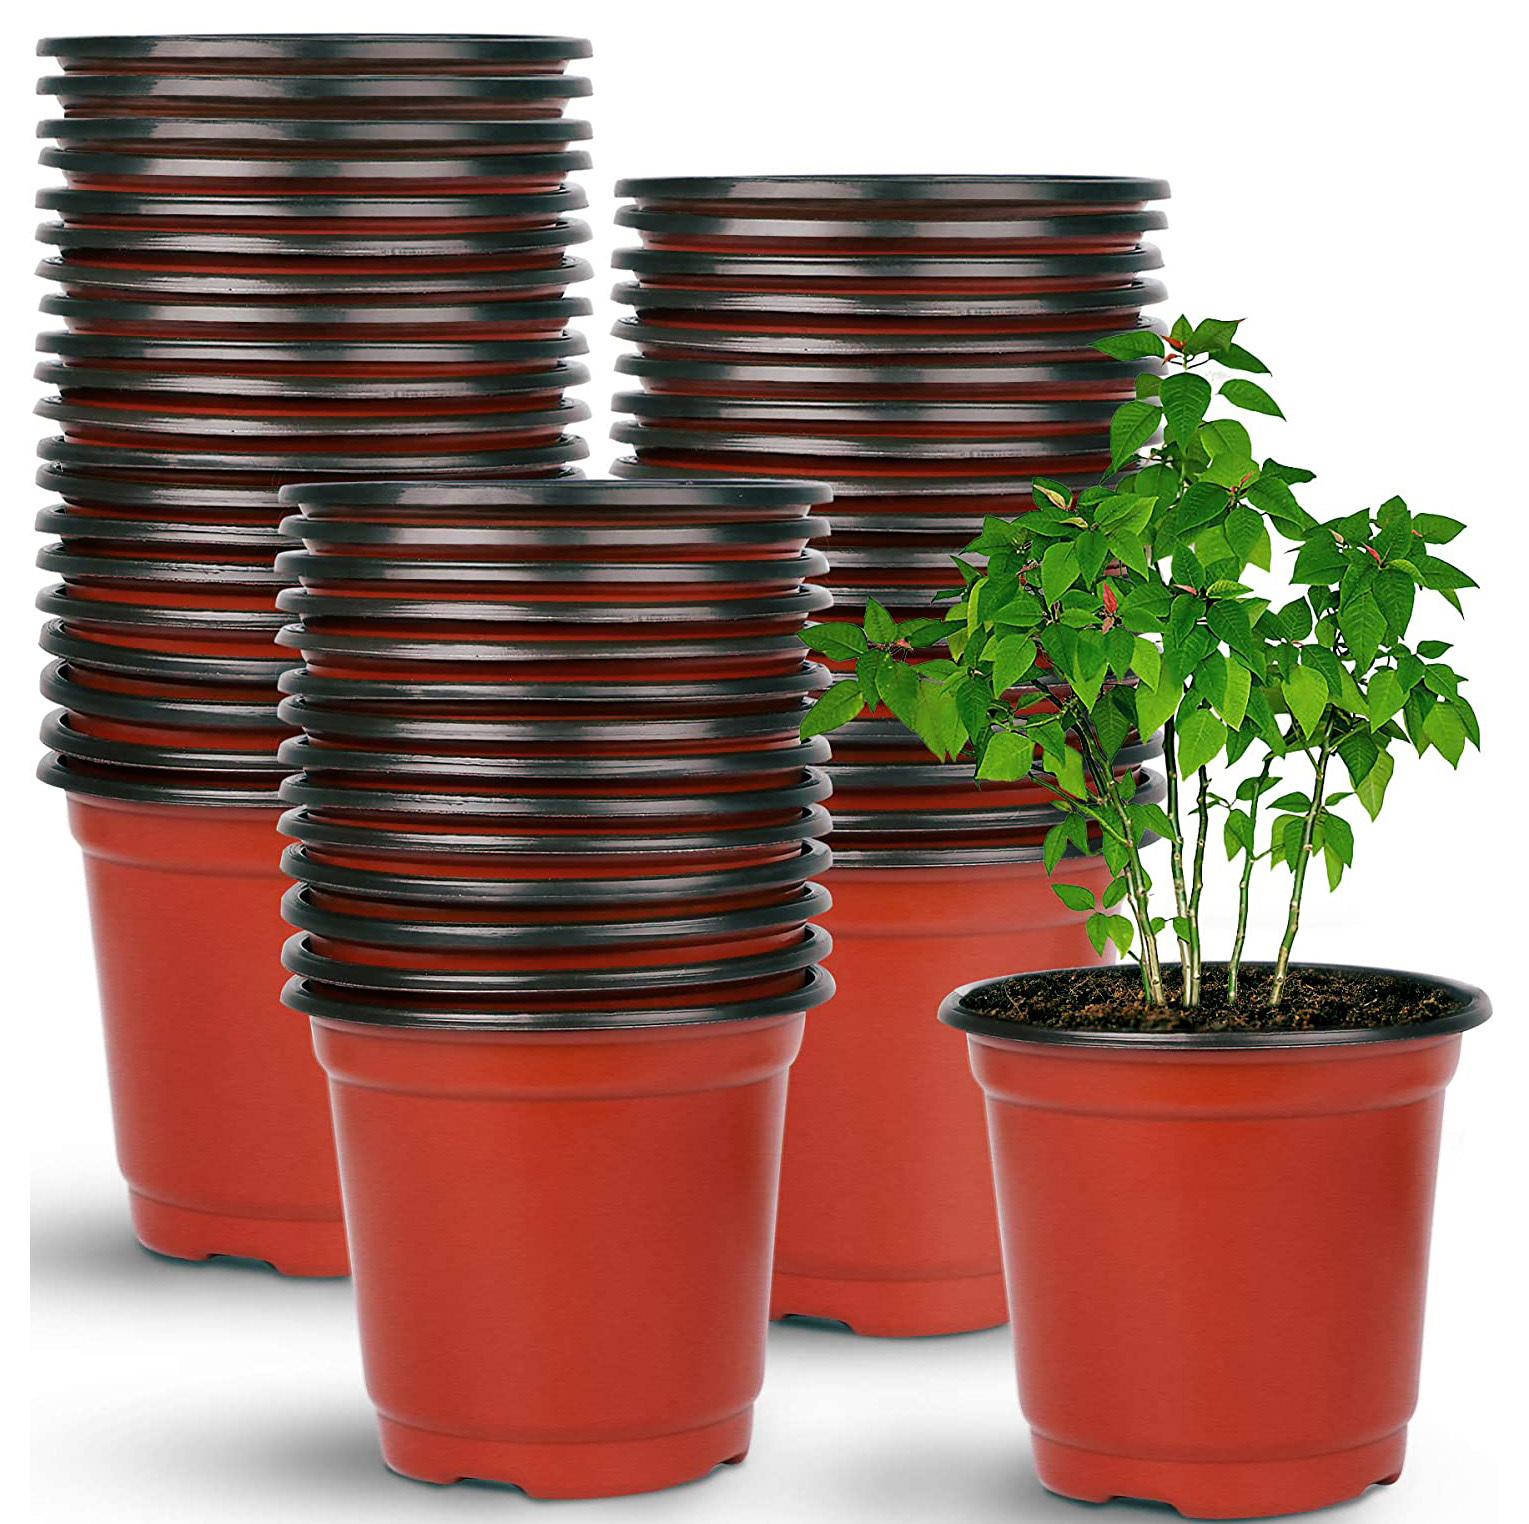 100 X Plant Flower Garden Pots Nursery Seedlings Pot Growing Container (150mm)